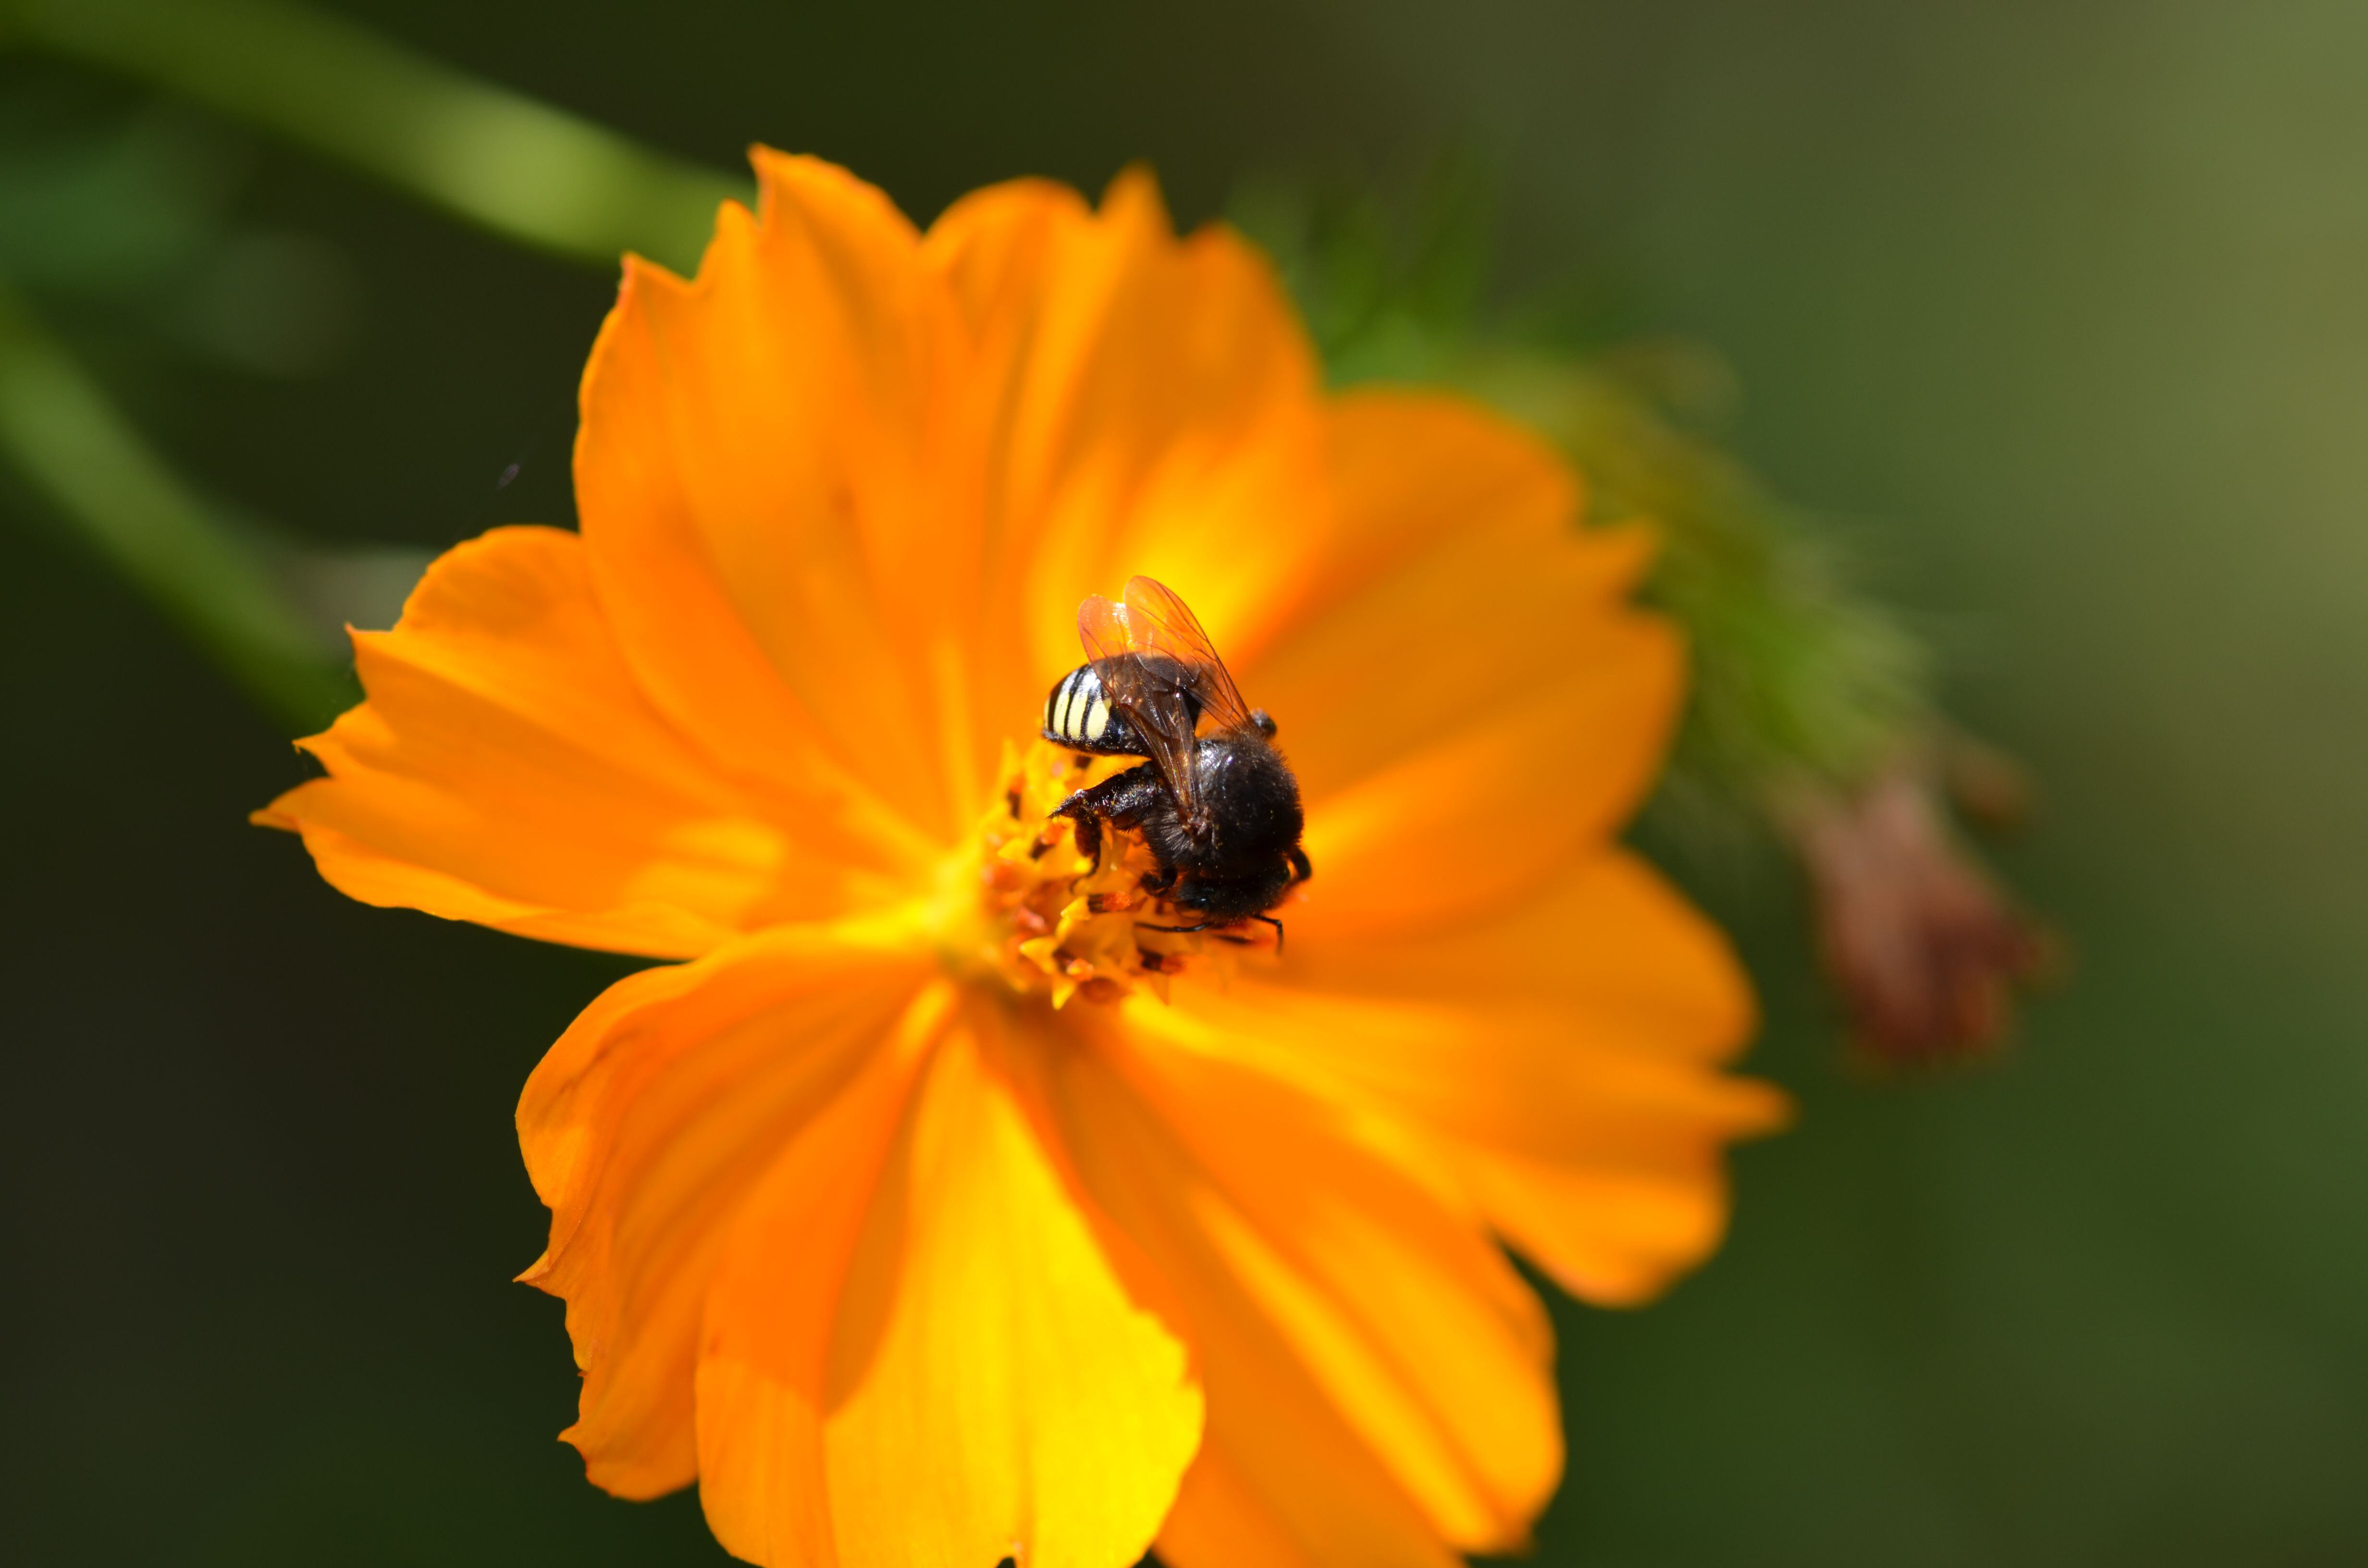 CAPTION
Stingless bee (Melipona quadrifasciata) collecting nectar
CREDIT
Christoph Grueter